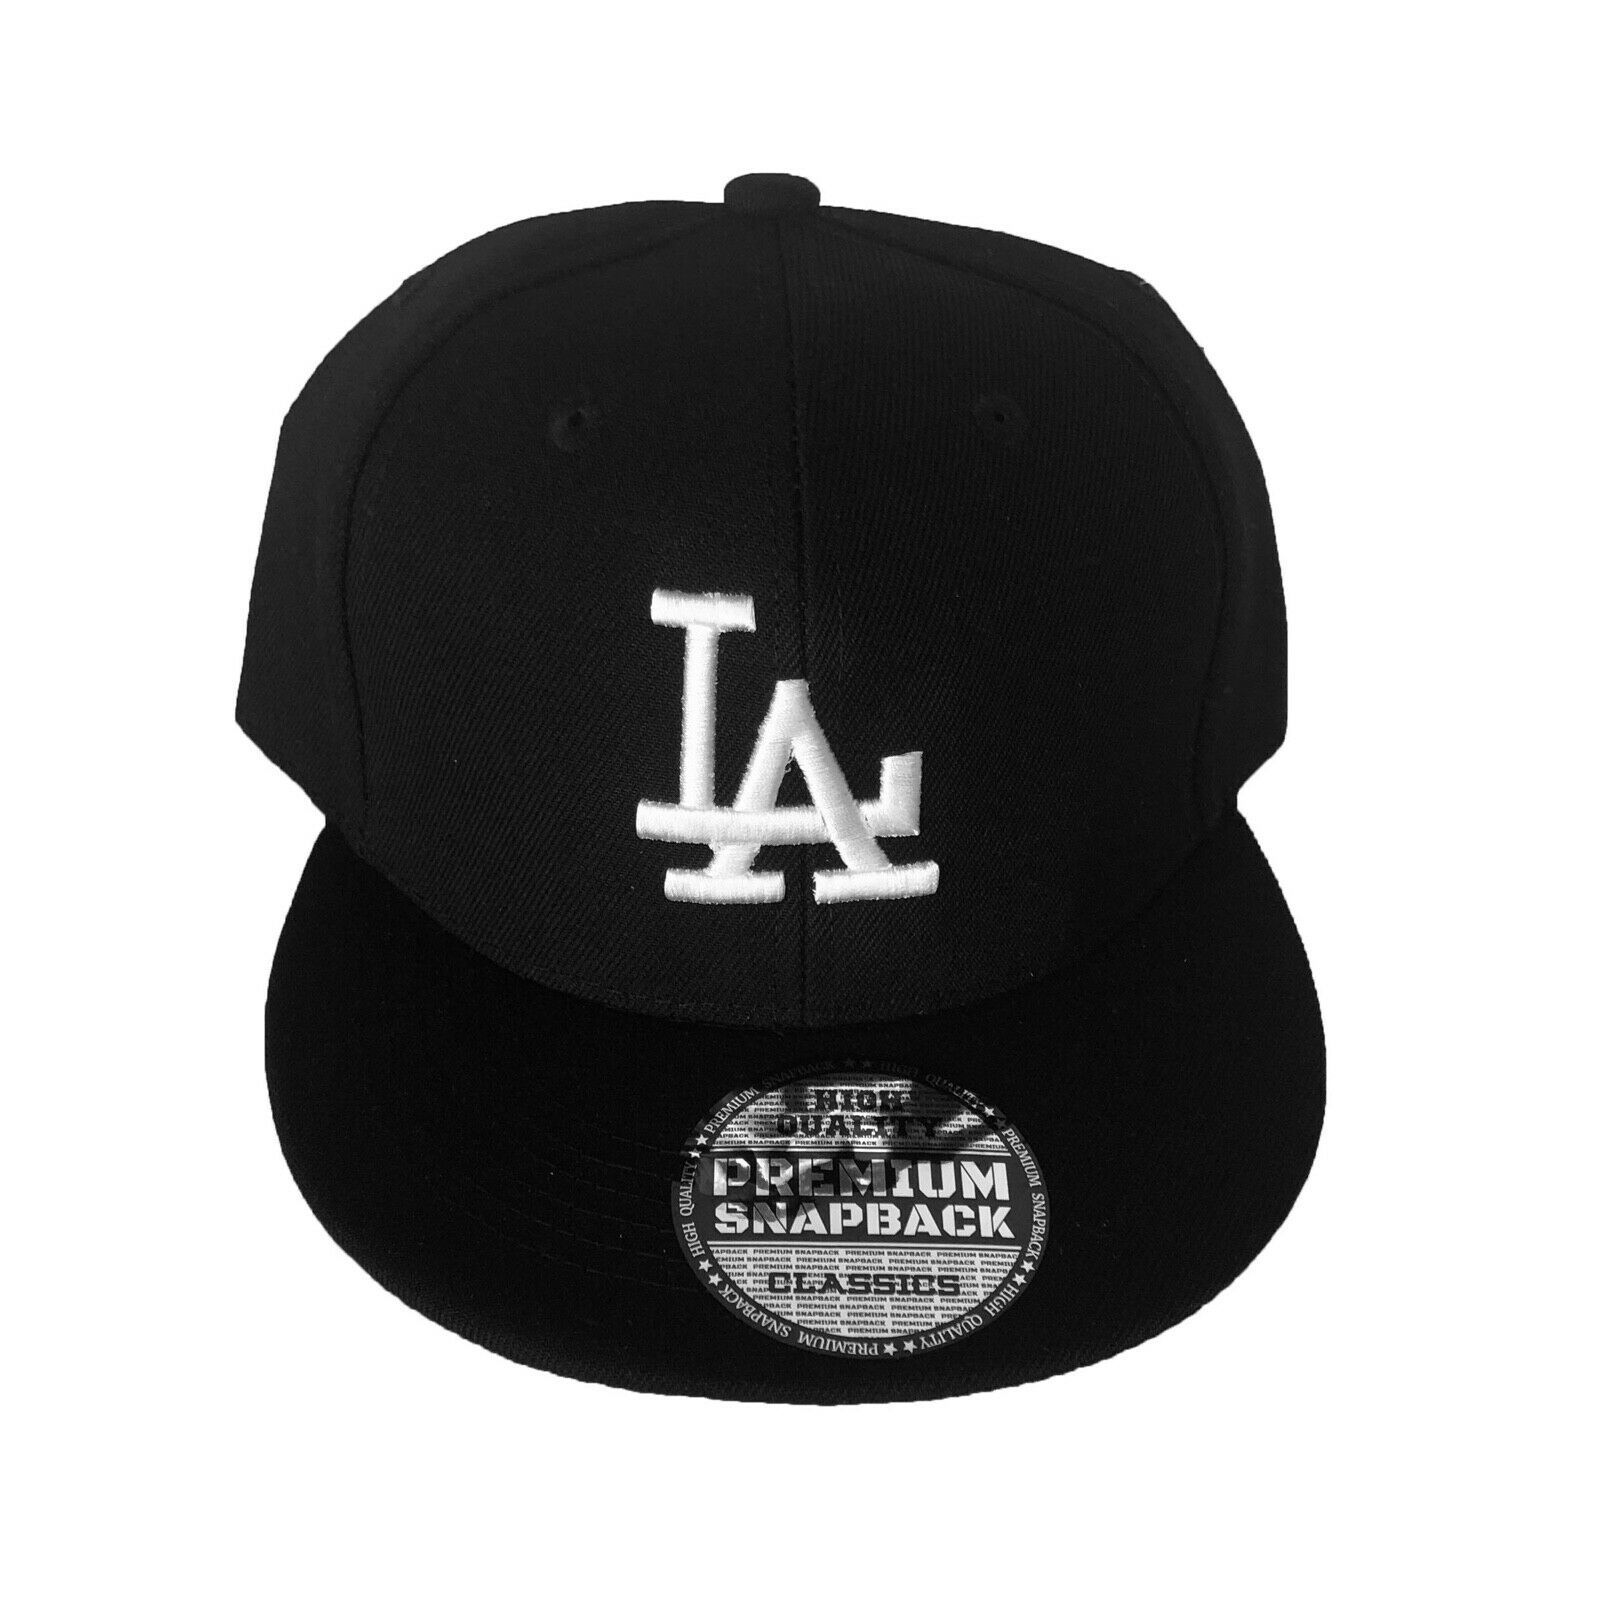 Los Angeles Dodgers Baseball Cap Snapback Hat Black w/ white logo Adjustable New